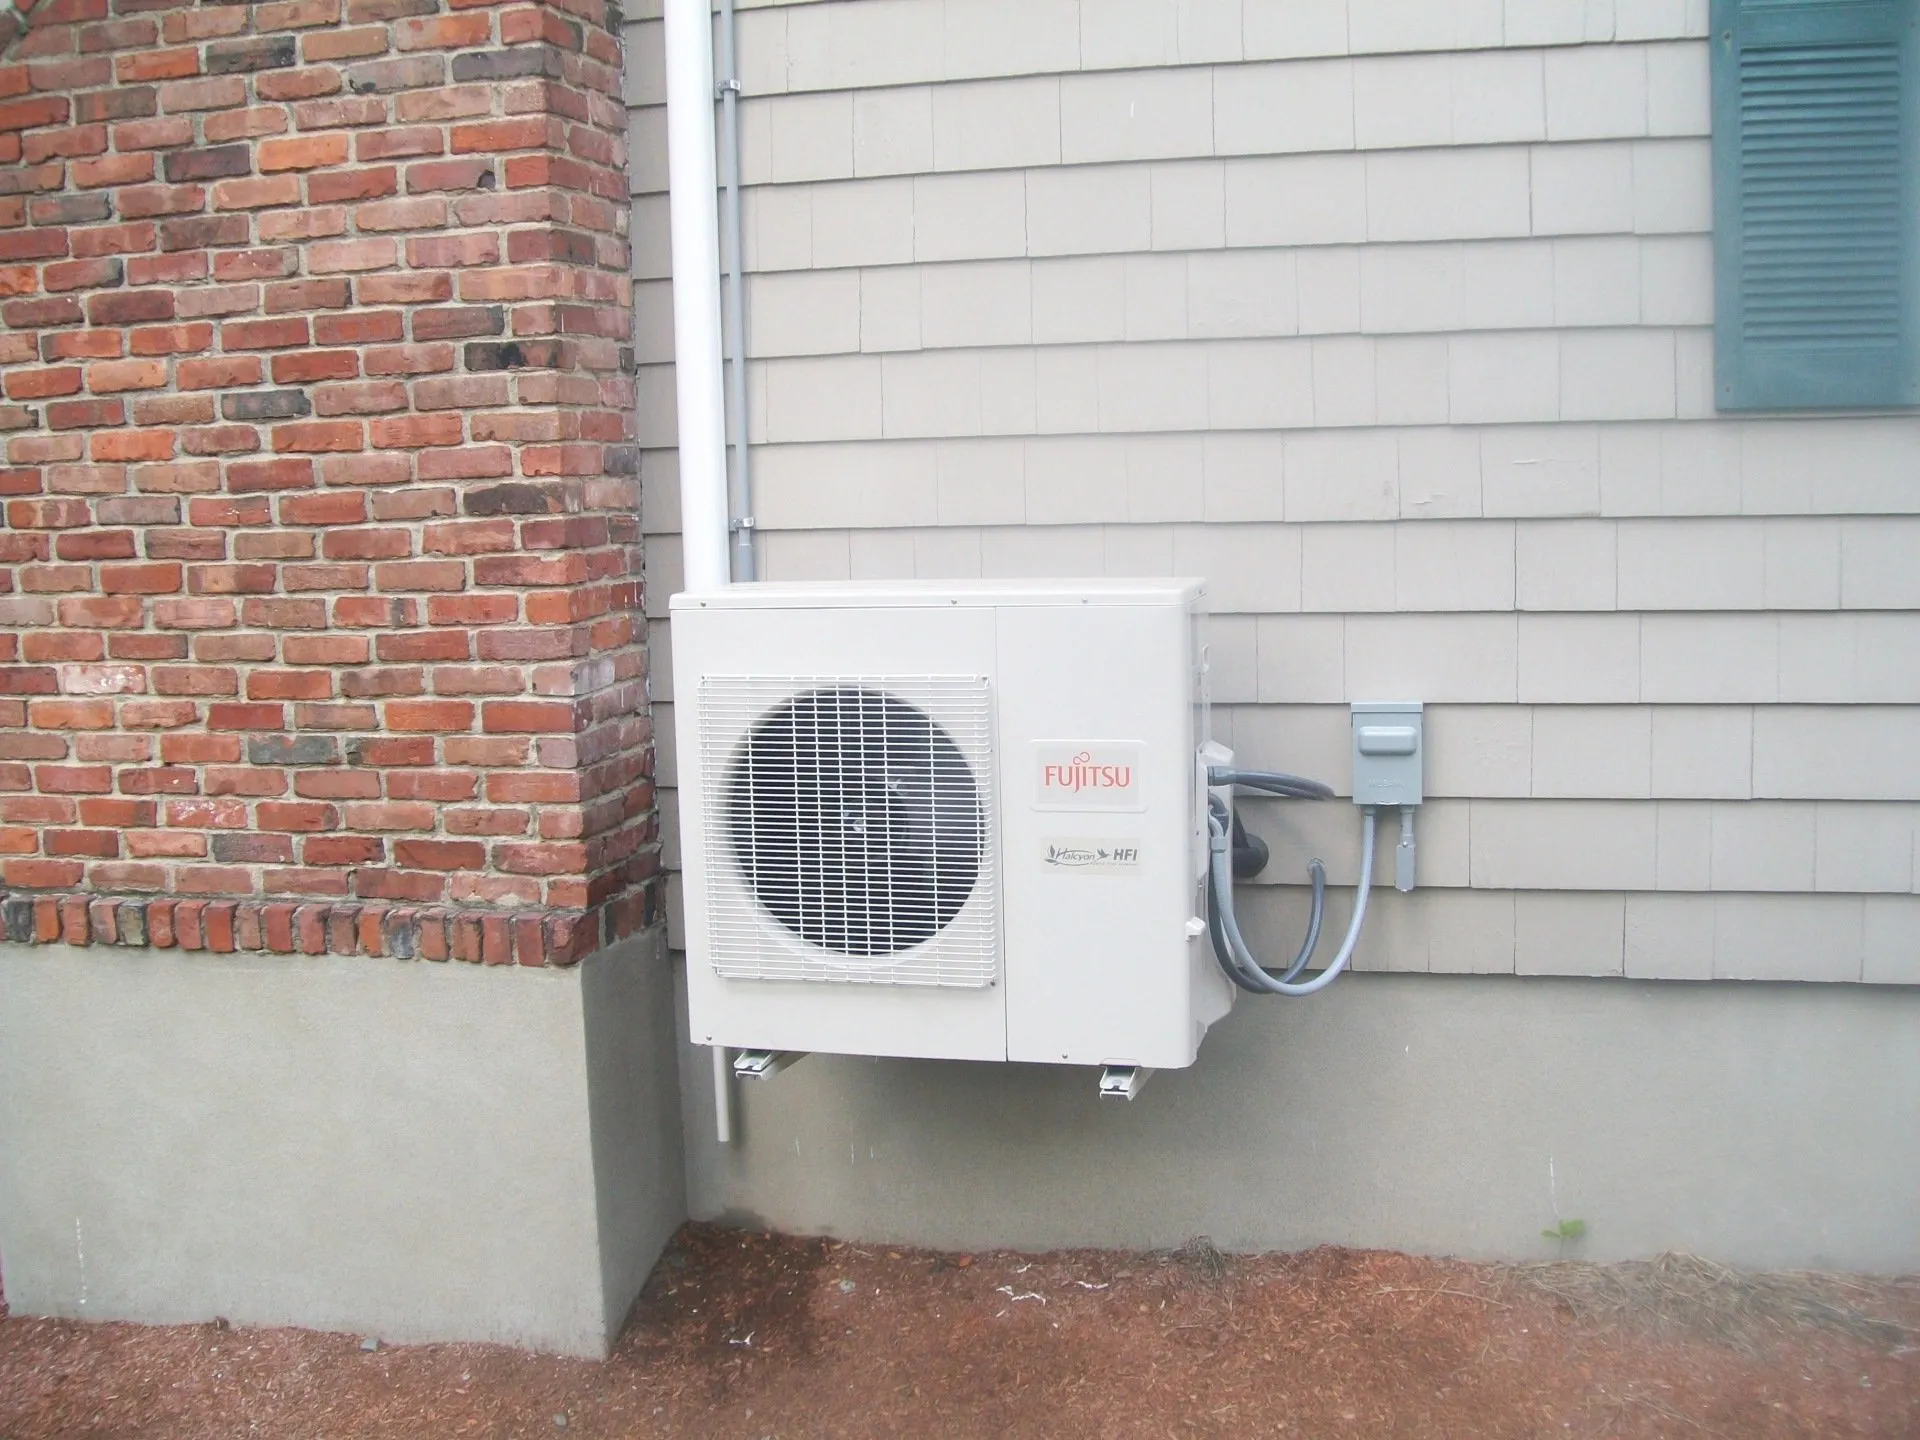 Home outdoor condenser unit.